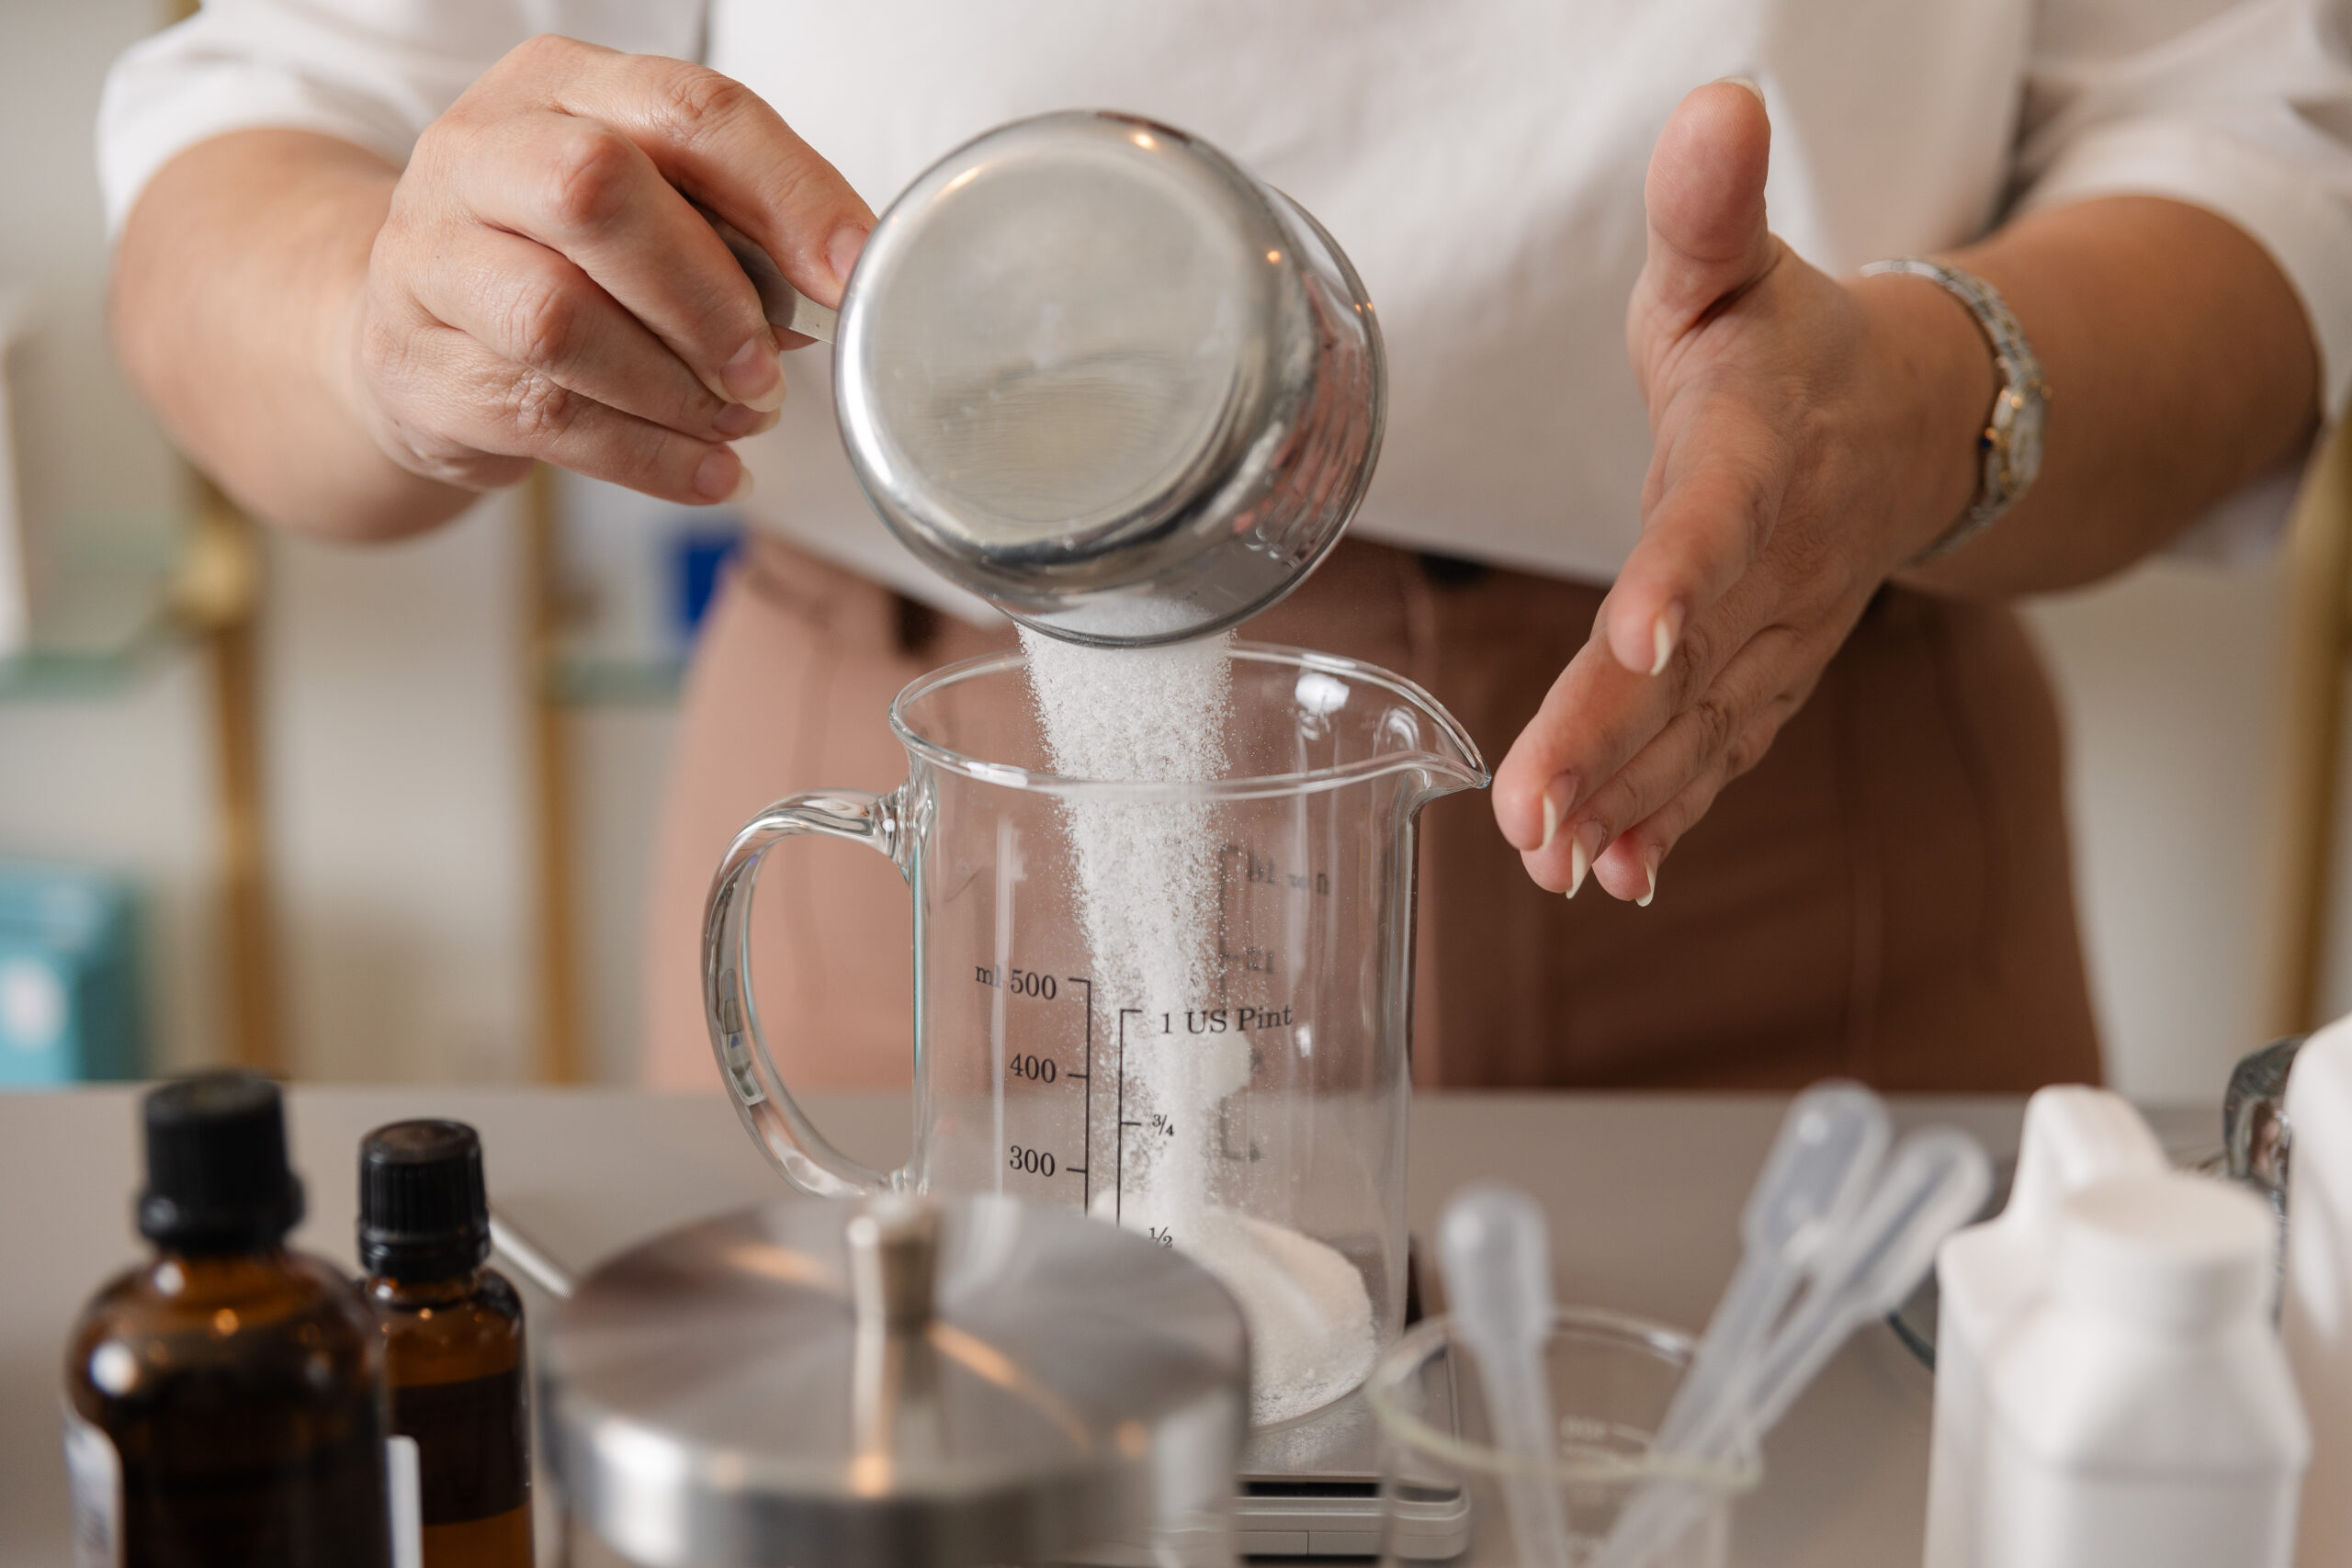 a woman pours sugar into a beaker to create a custom homemade sugar scrub